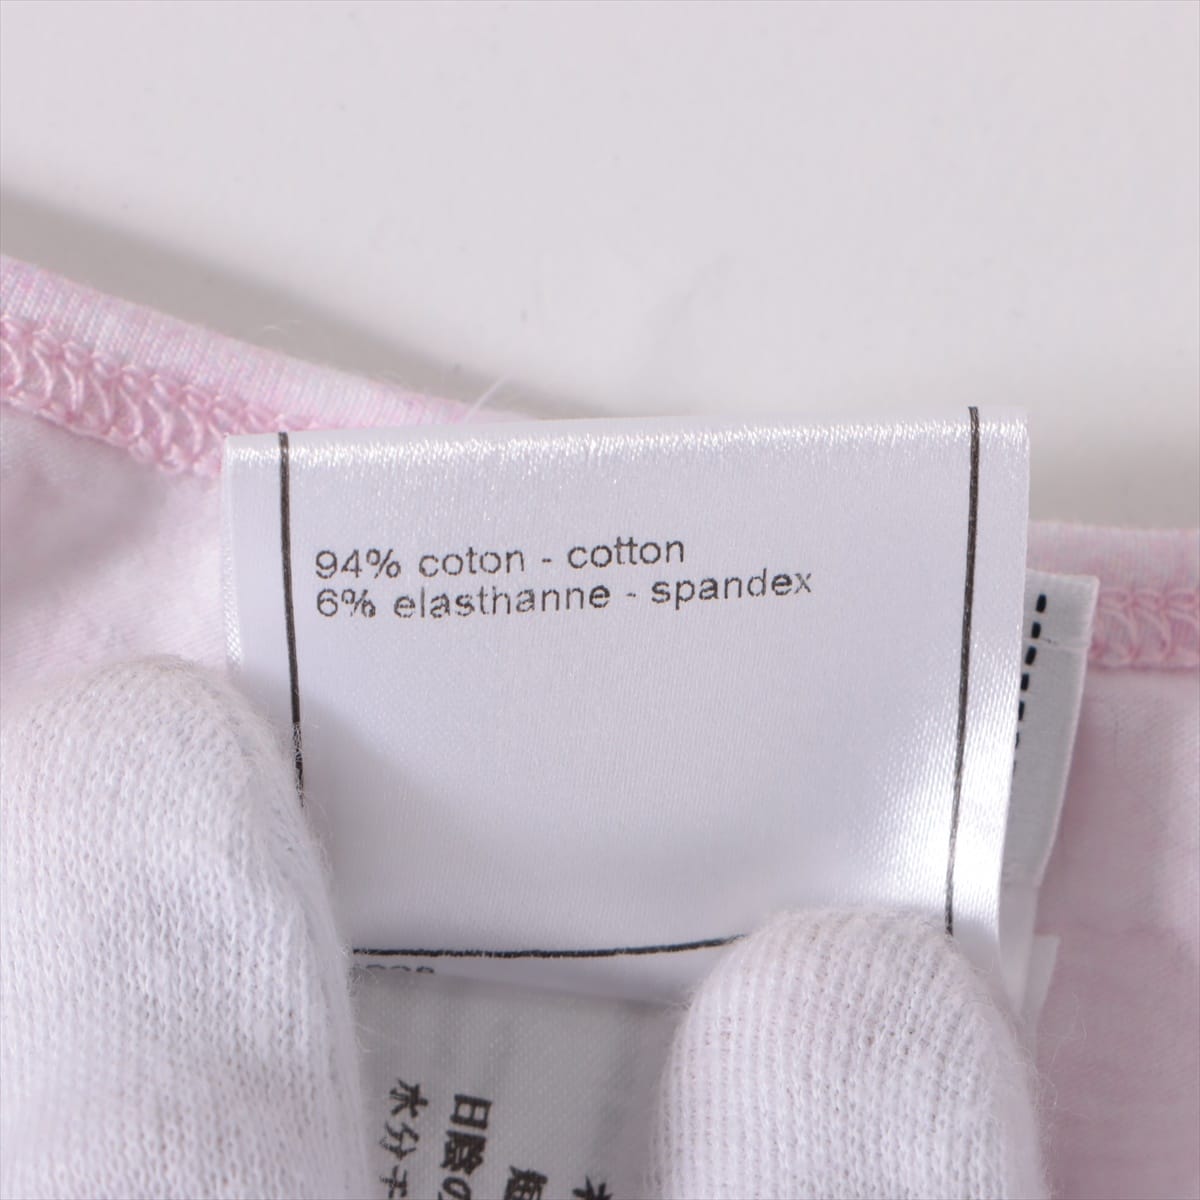 Chanel Coco Mark 09C Cotton T-shirt 34 Ladies' Pink